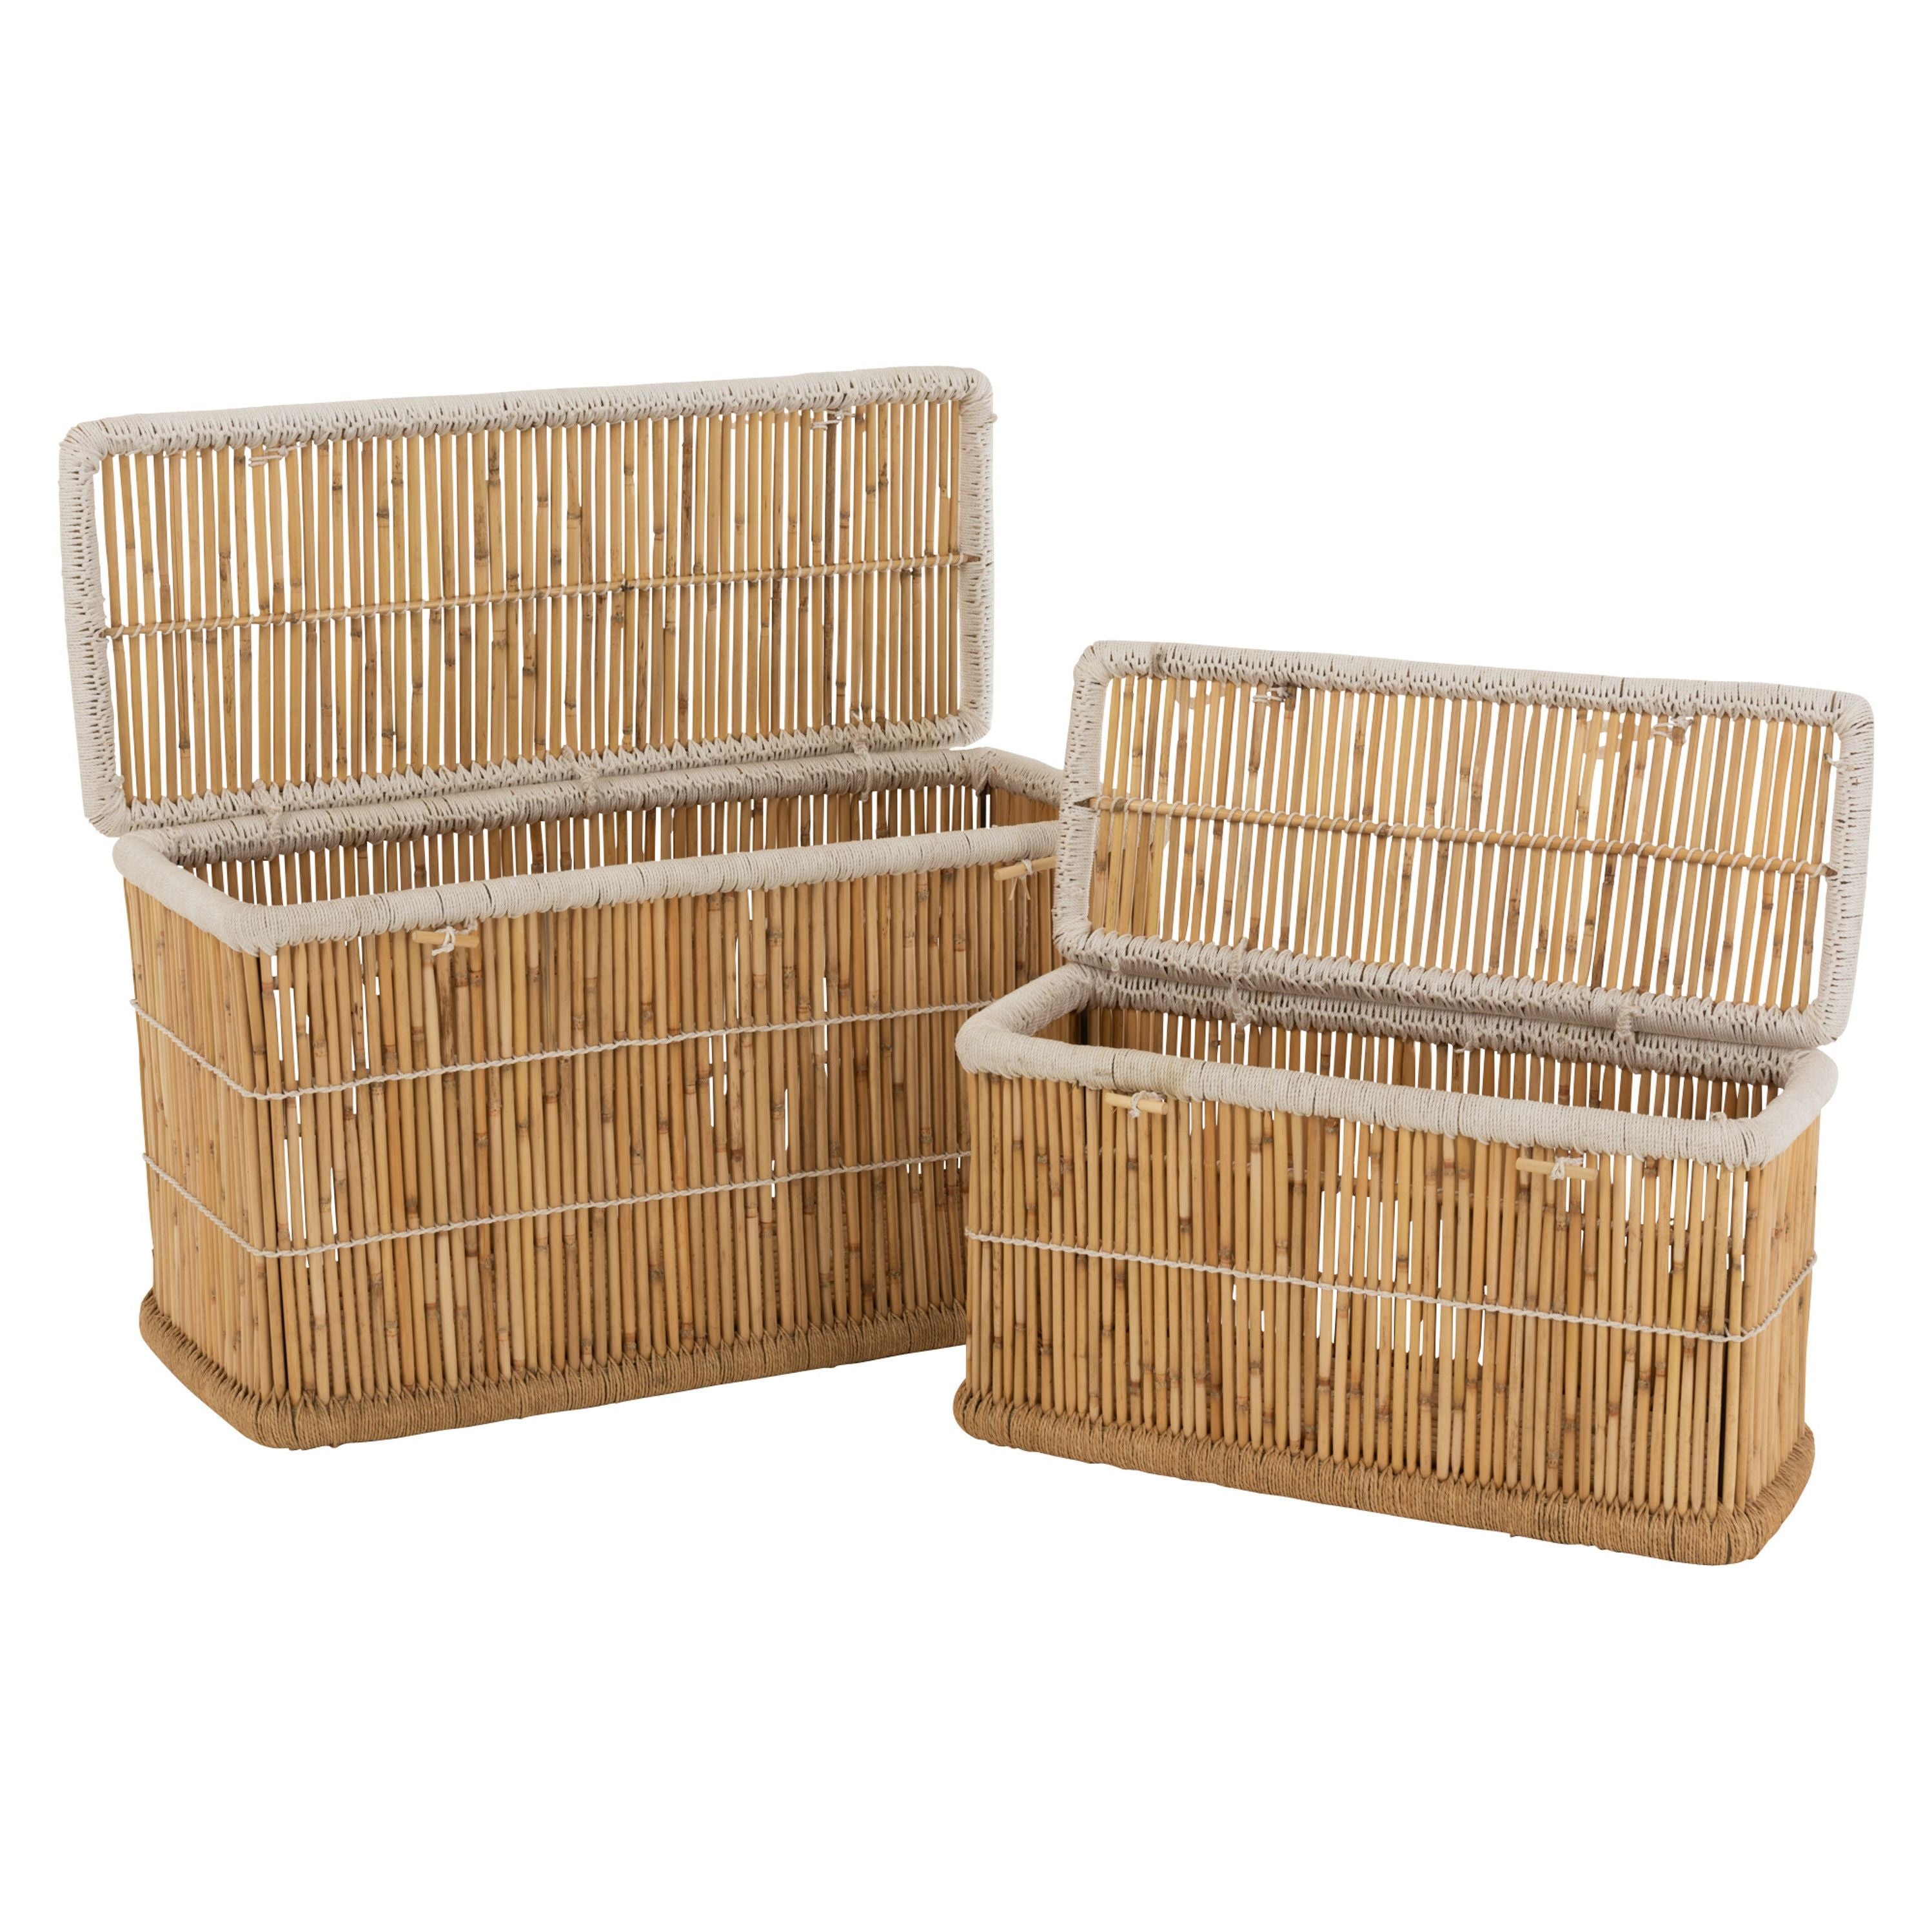 Baskets Rectangular Bamboo Natural/white